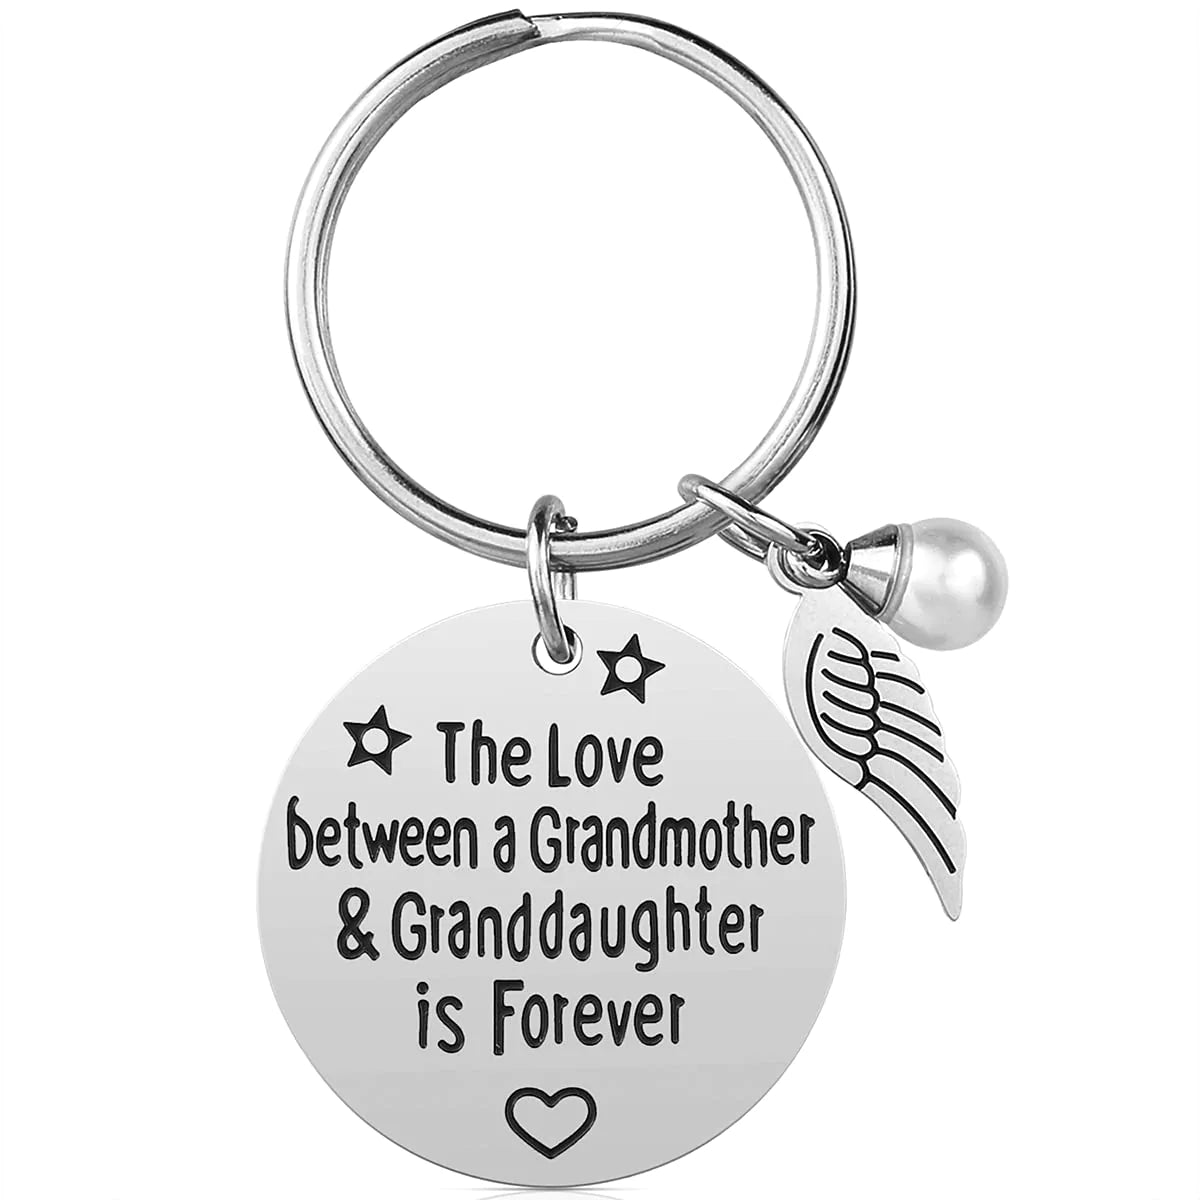 For Granddaughter - The Love Between Grandmother And Granddaughter Is Forever-37bracelet